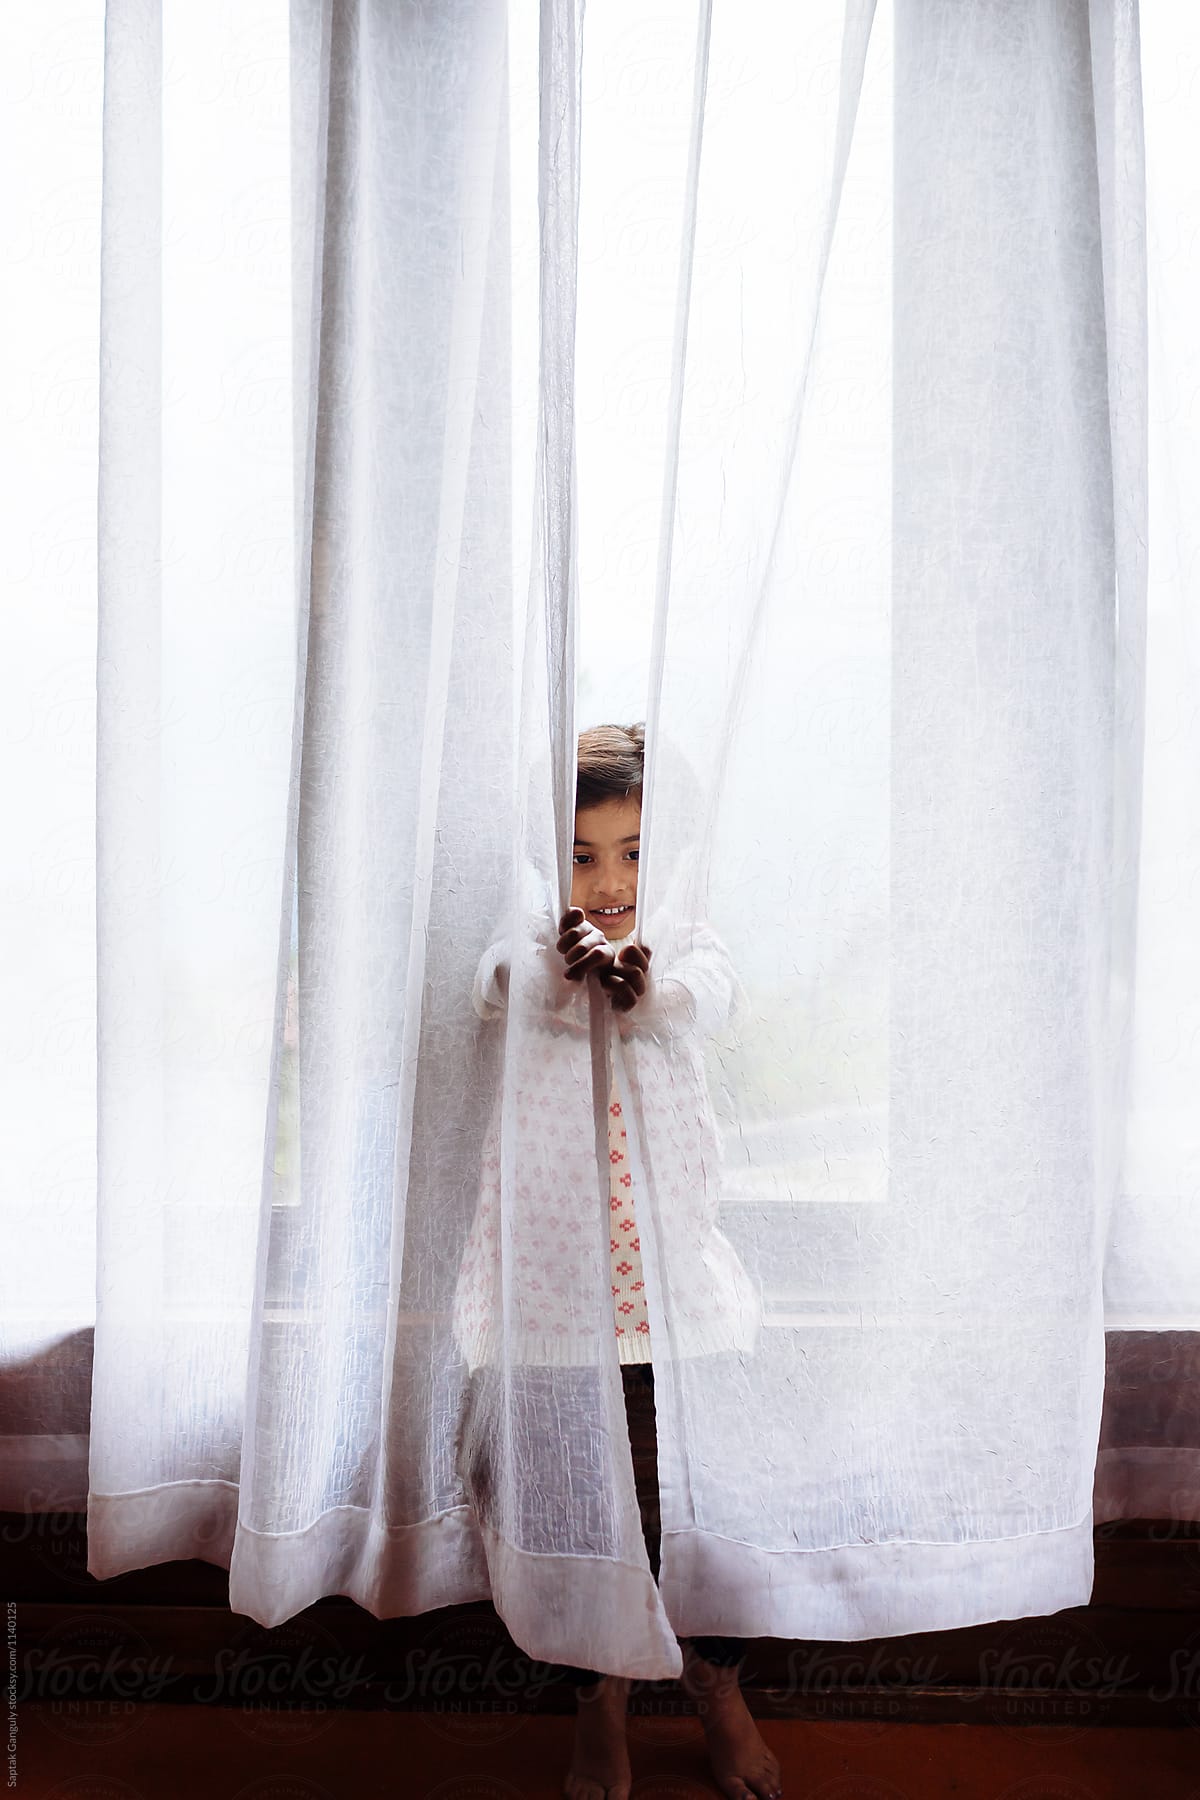 Little girl hiding behind the curtains